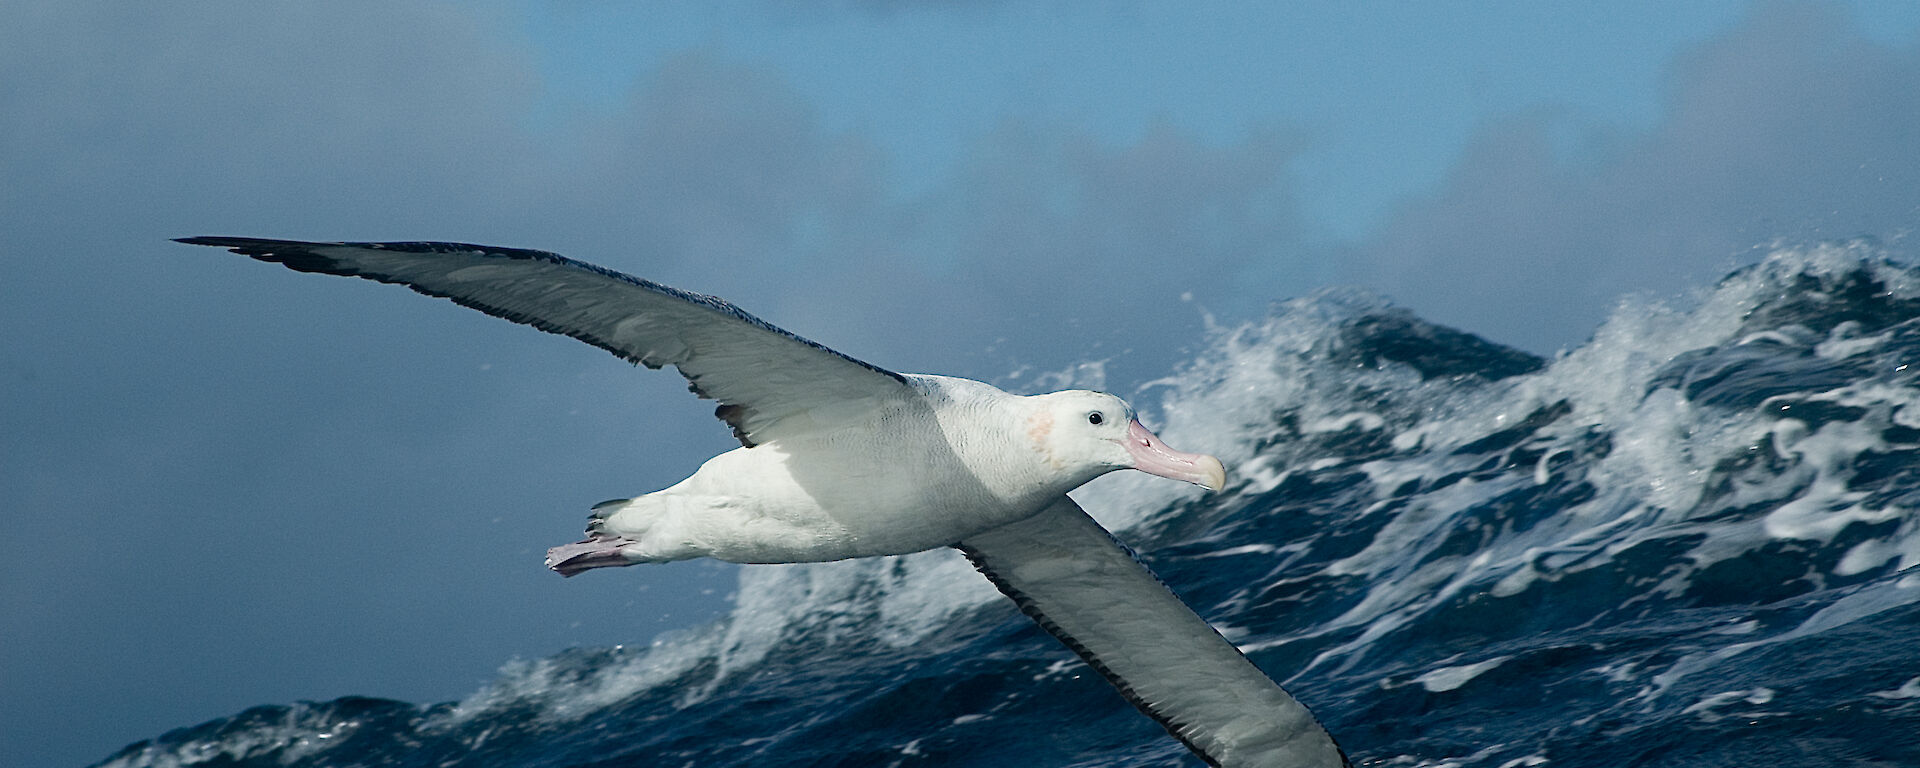 Wandering albatross in flight